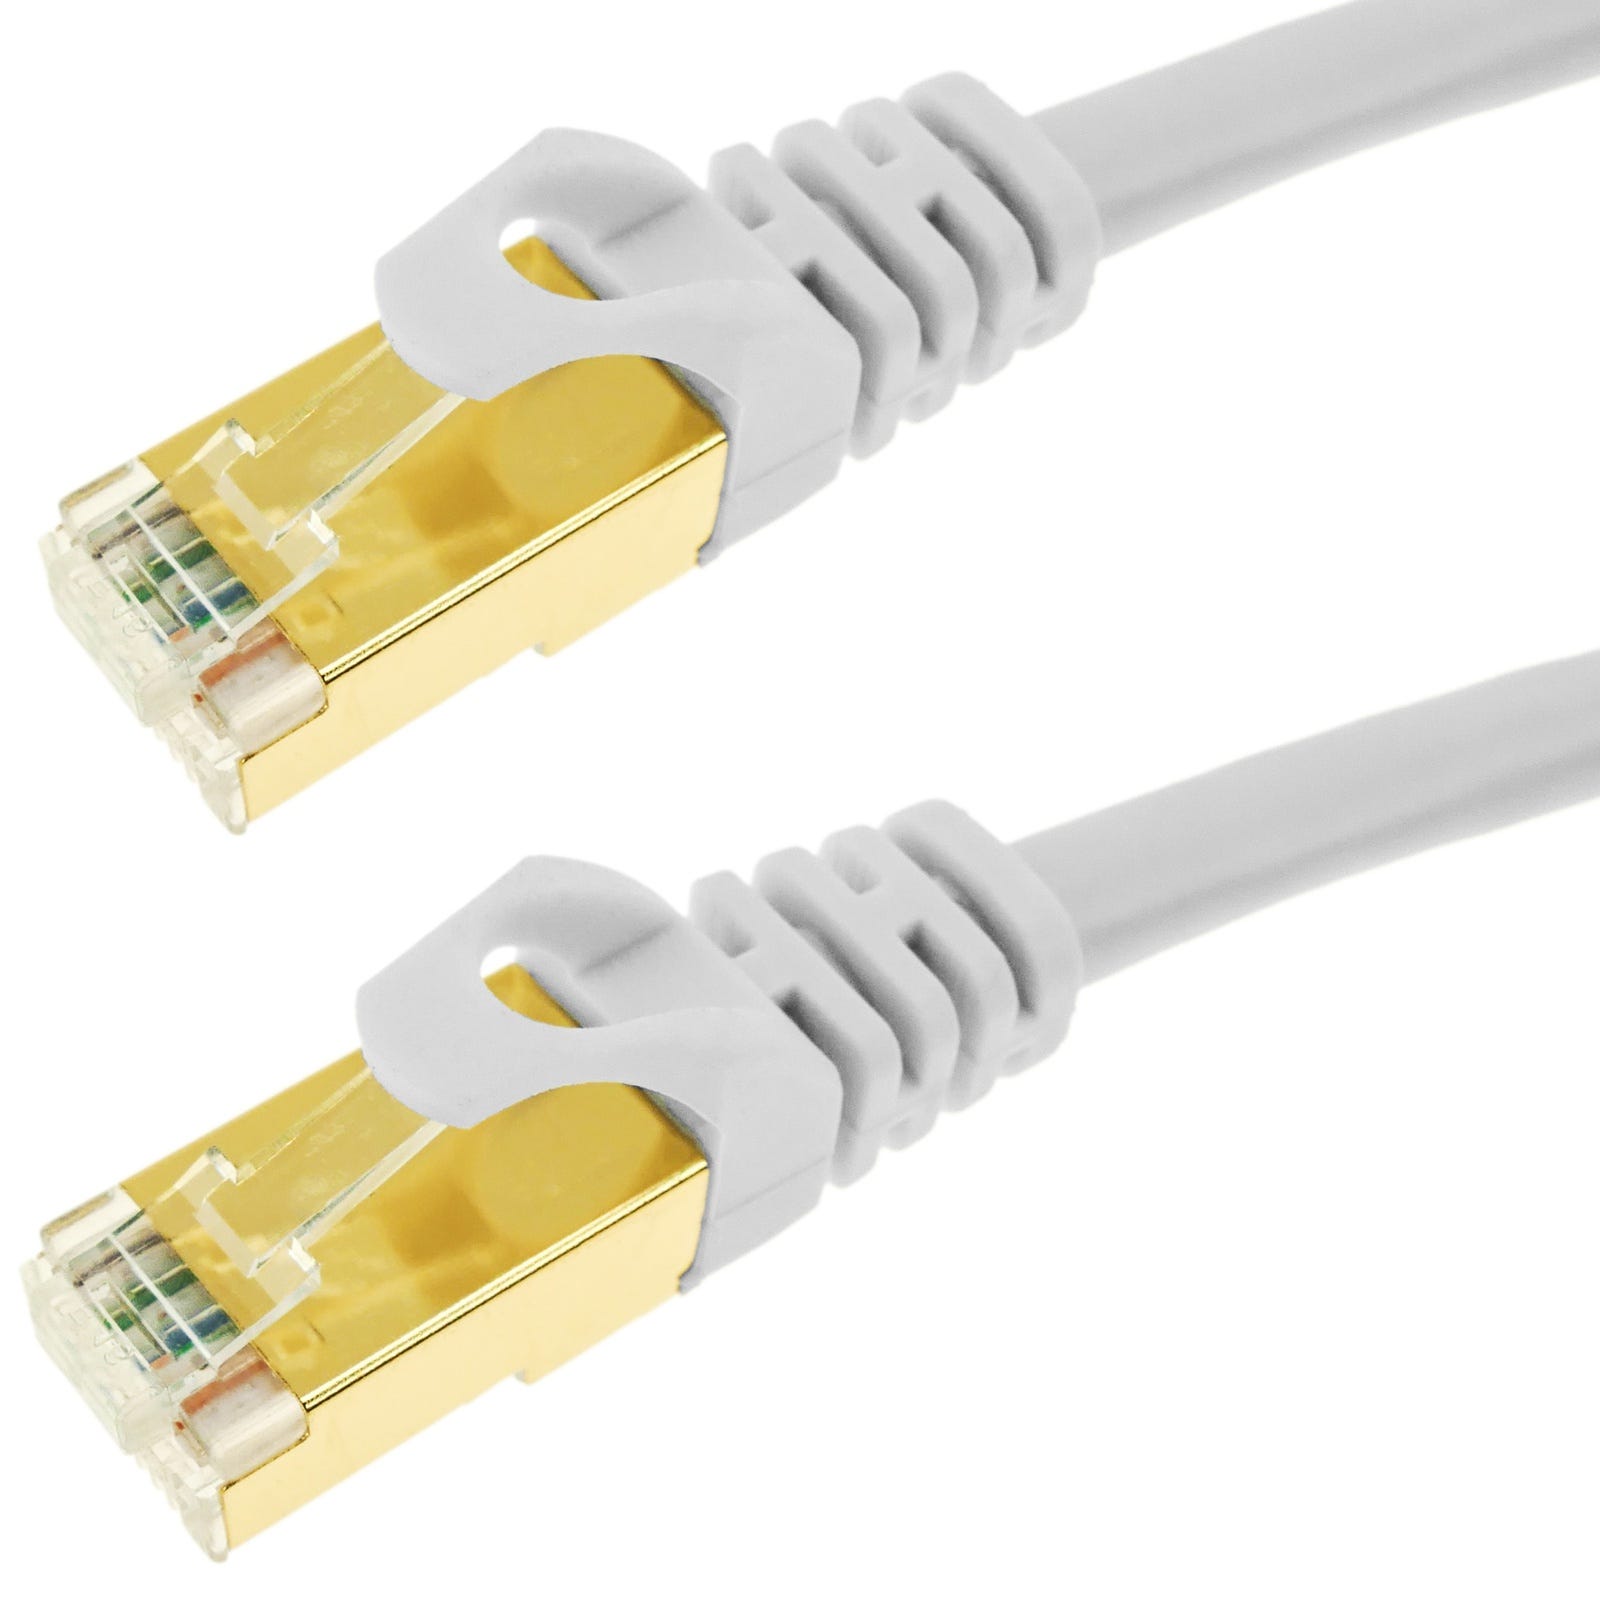 Cable de red ethernet 15 metros LAN STP RJ45 Cat.7 blanco